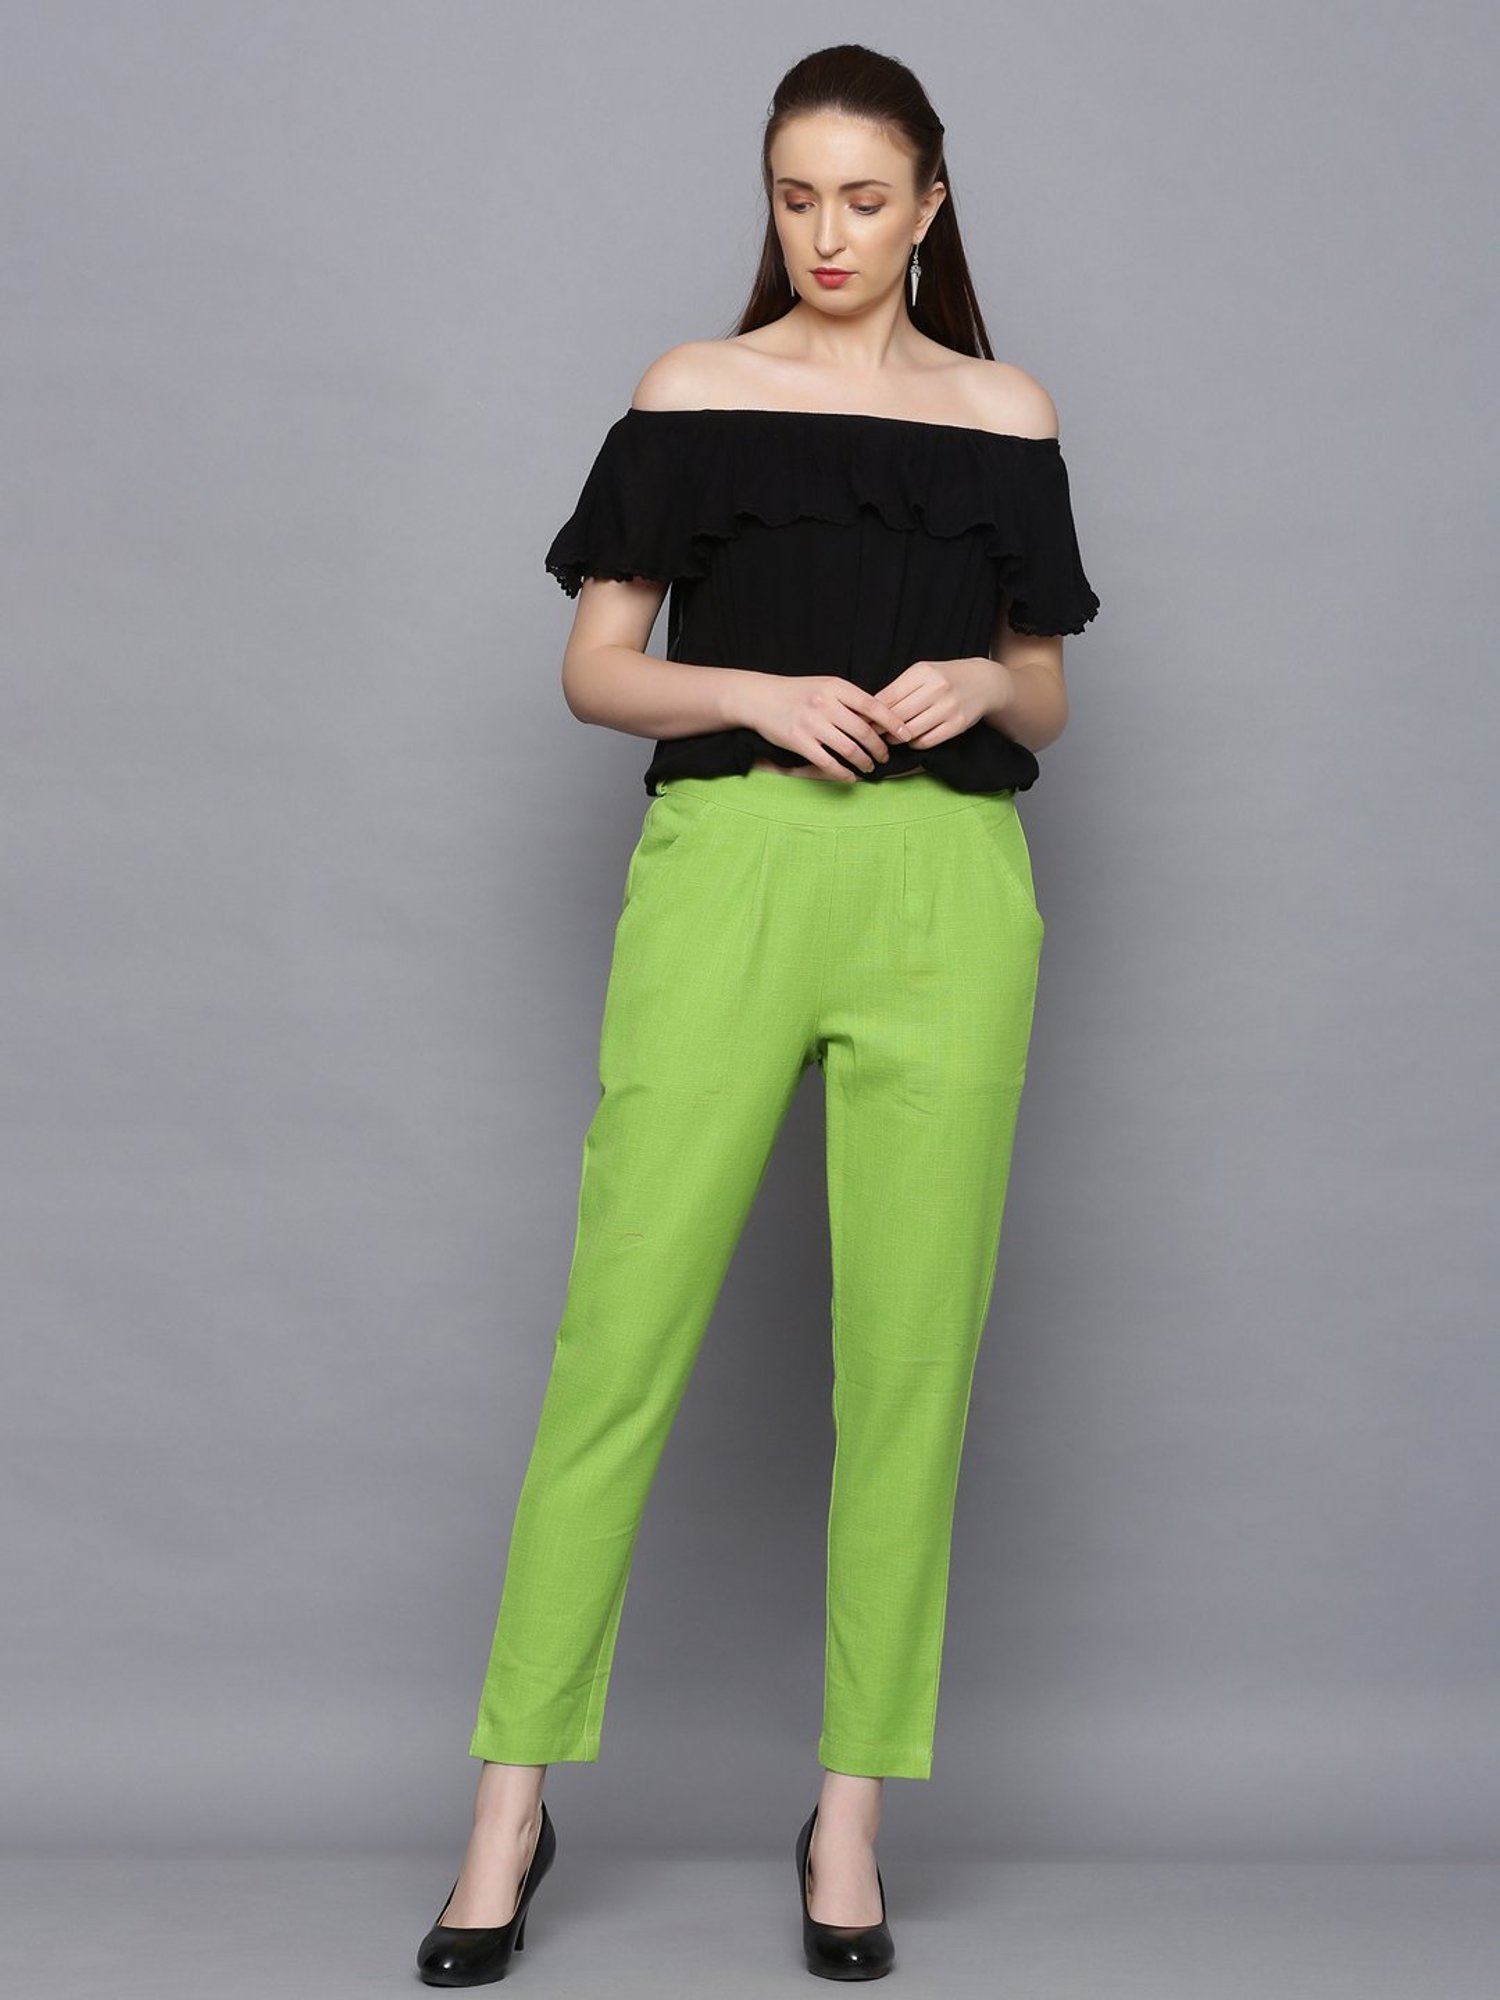 Green  Parrot Green Asymmetrical Silk Top and Green Raw Silk Pants   Chhaya Gandhi Design Studio